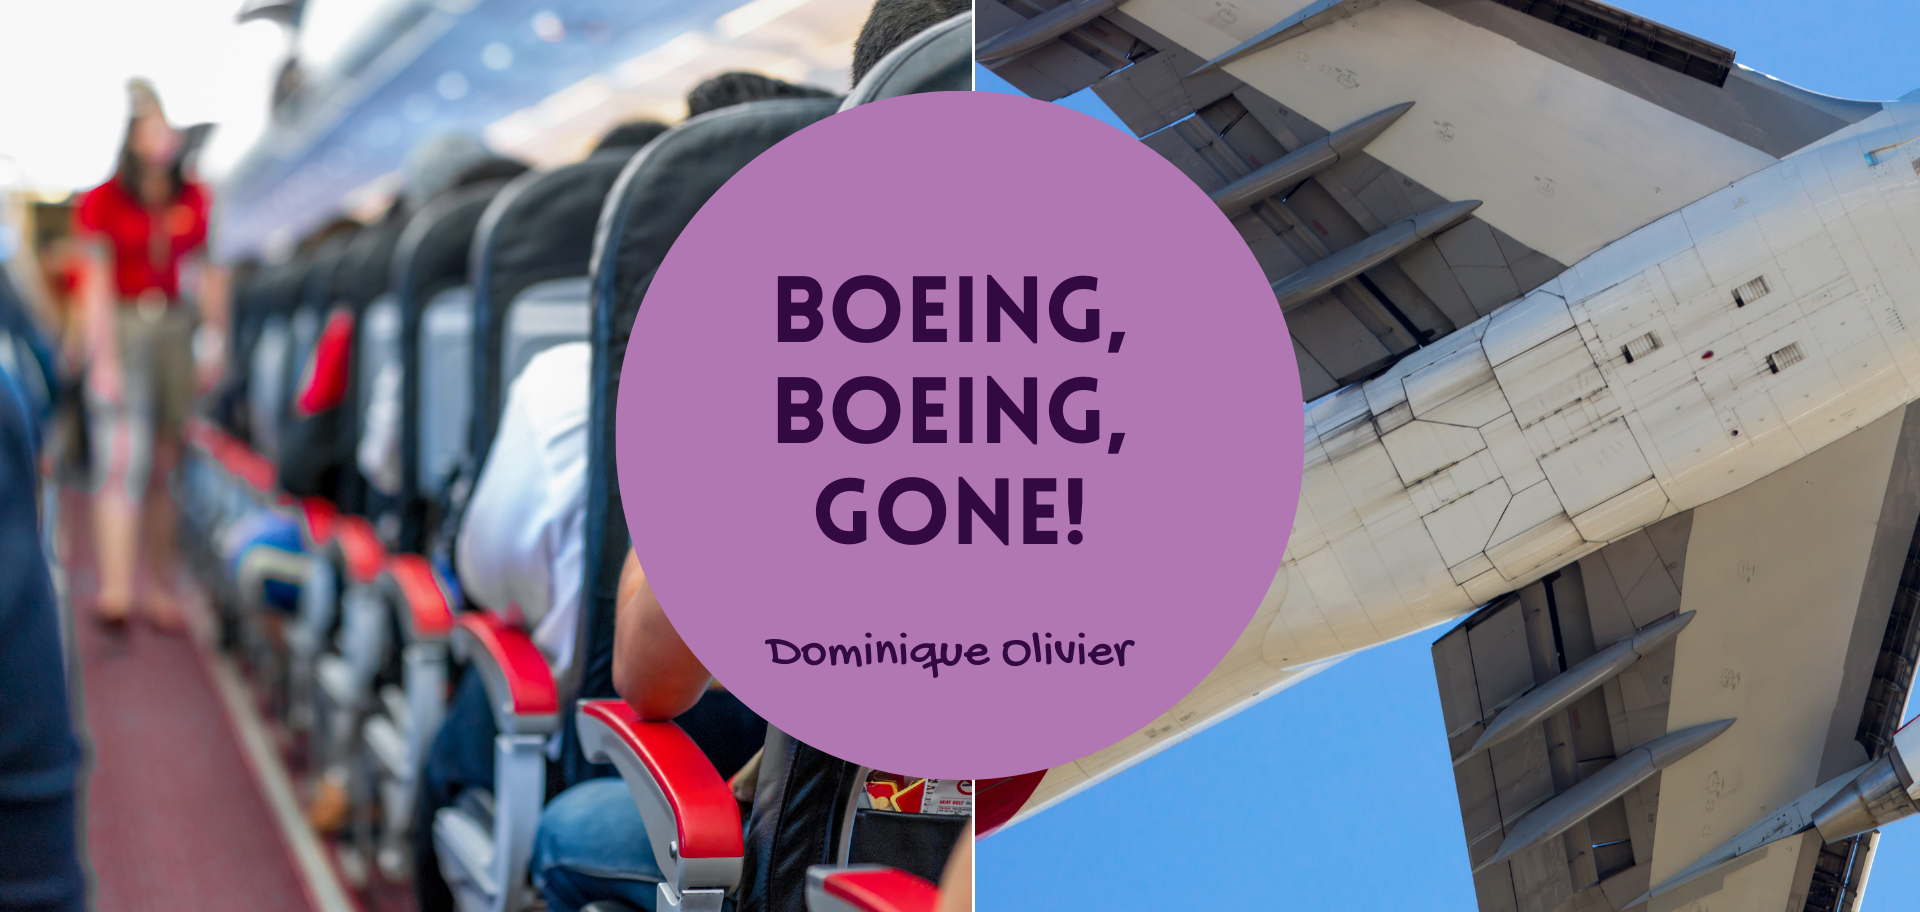 Boeing, Boeing, gone!